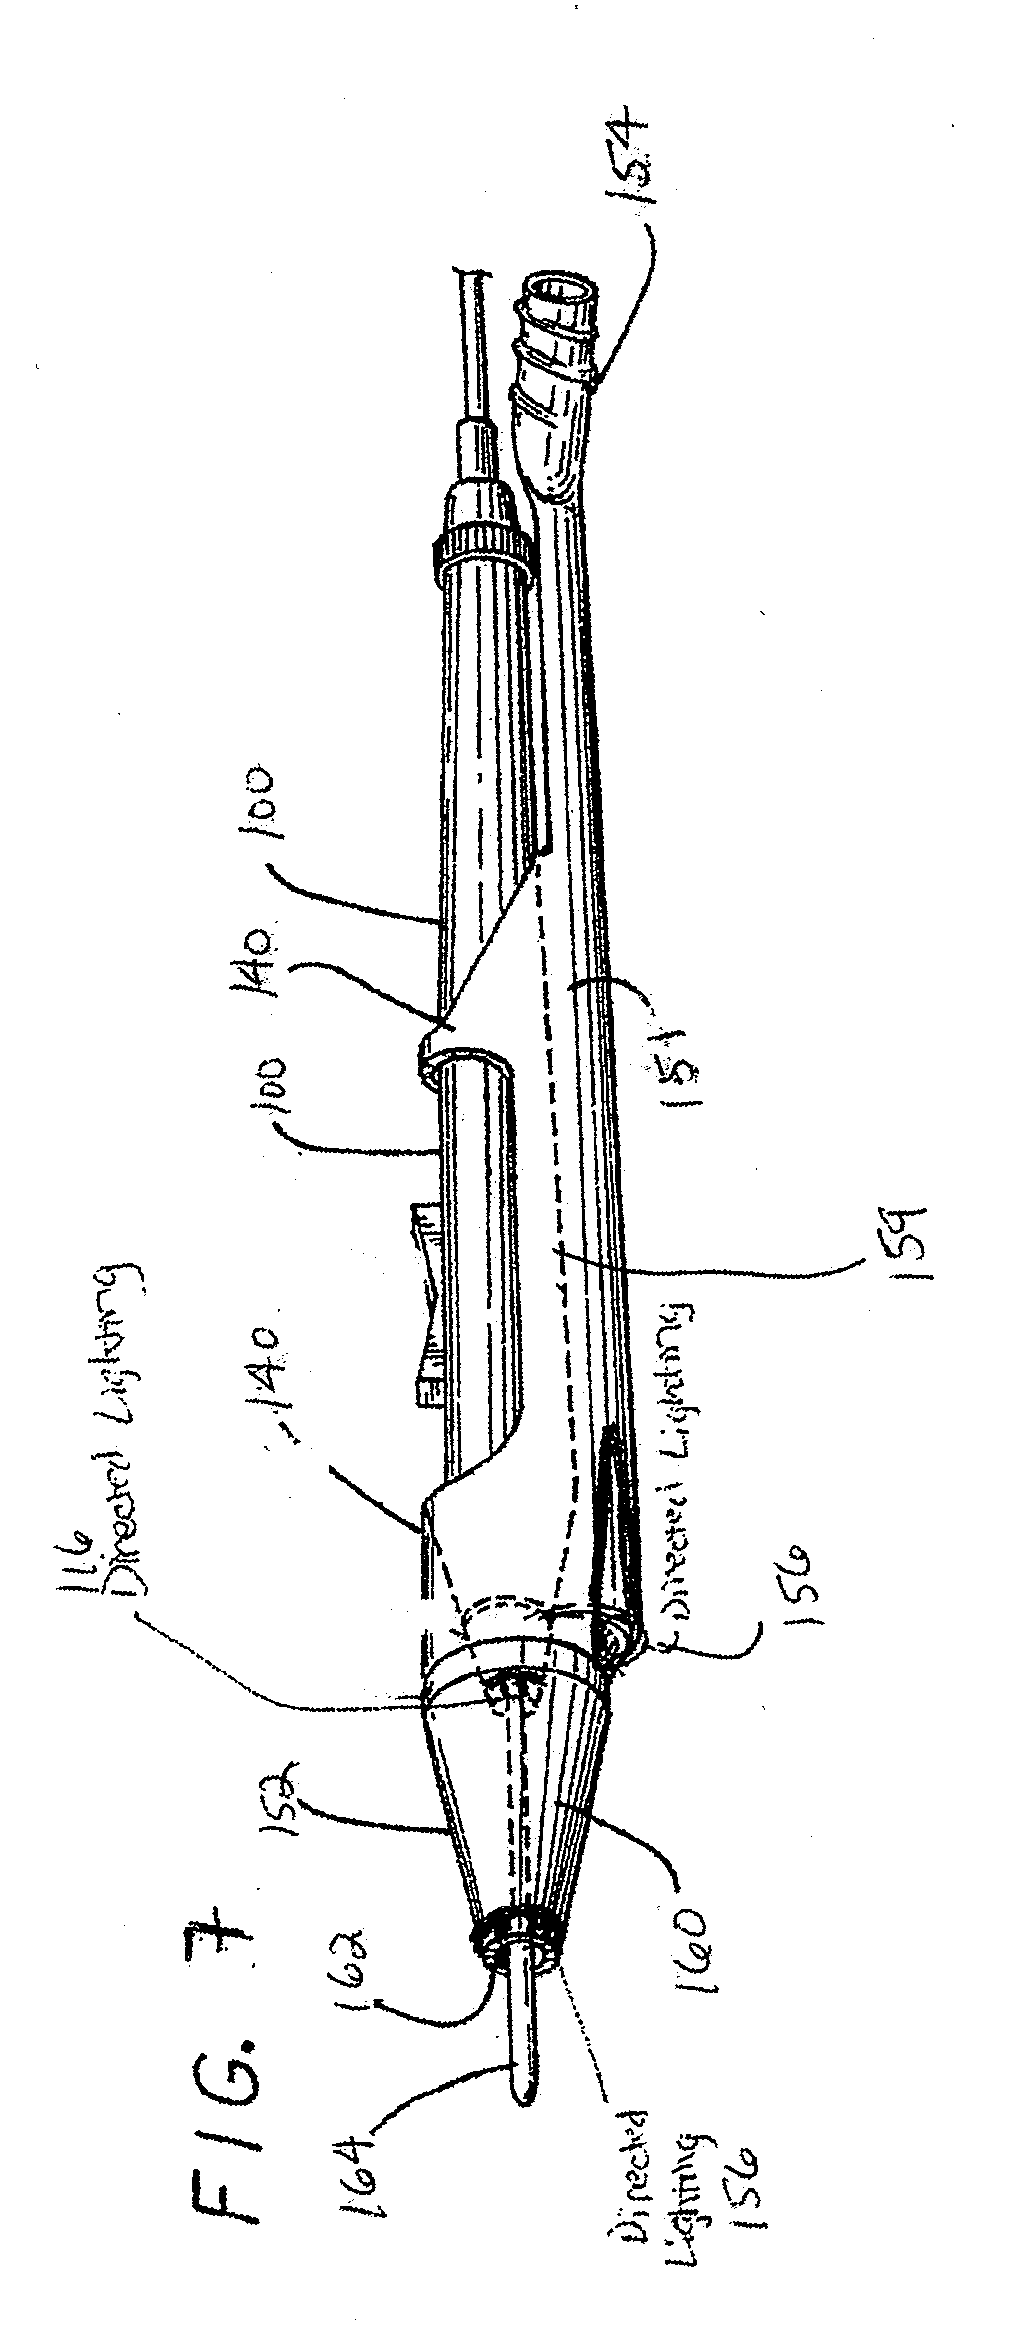 Electrosurgical unit pencil apparatus and shroud having directed illumination